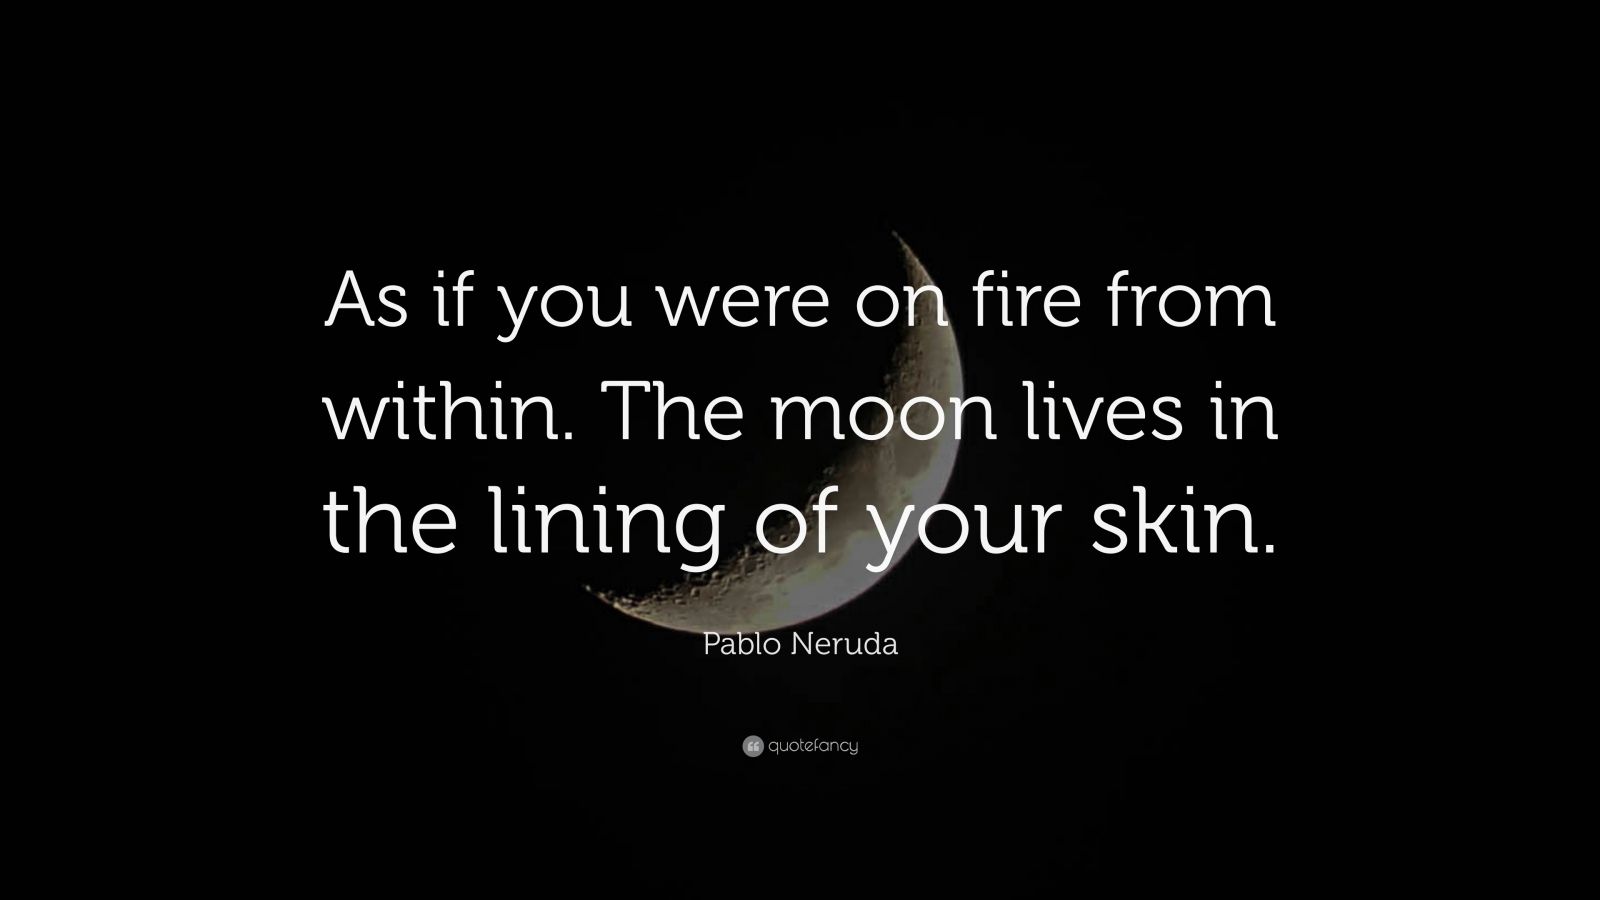 Pablo Neruda Quotes (73 wallpapers) - Quotefancy